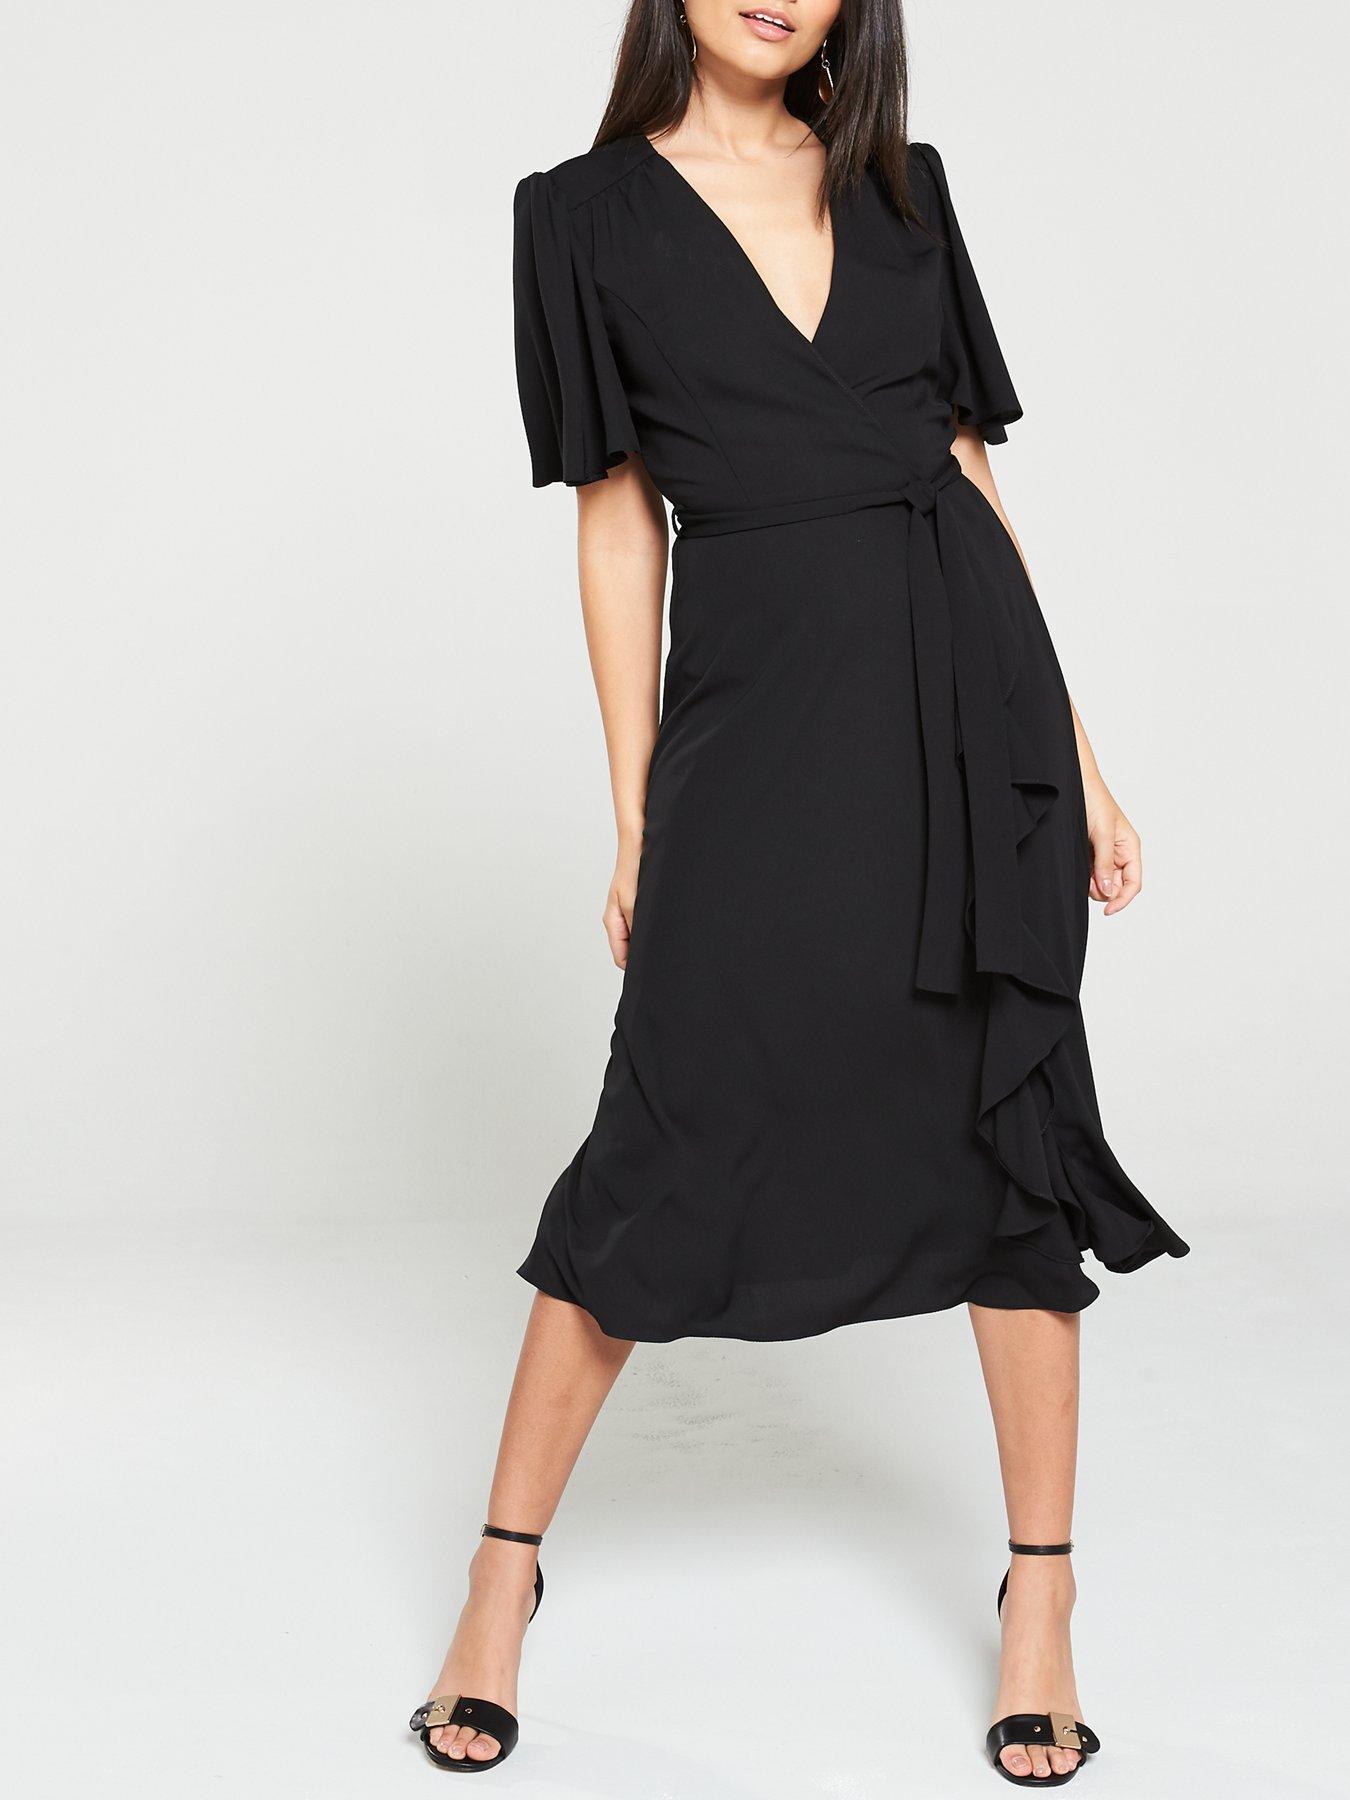 3/4 Length Sleeve | Summer Dresses 